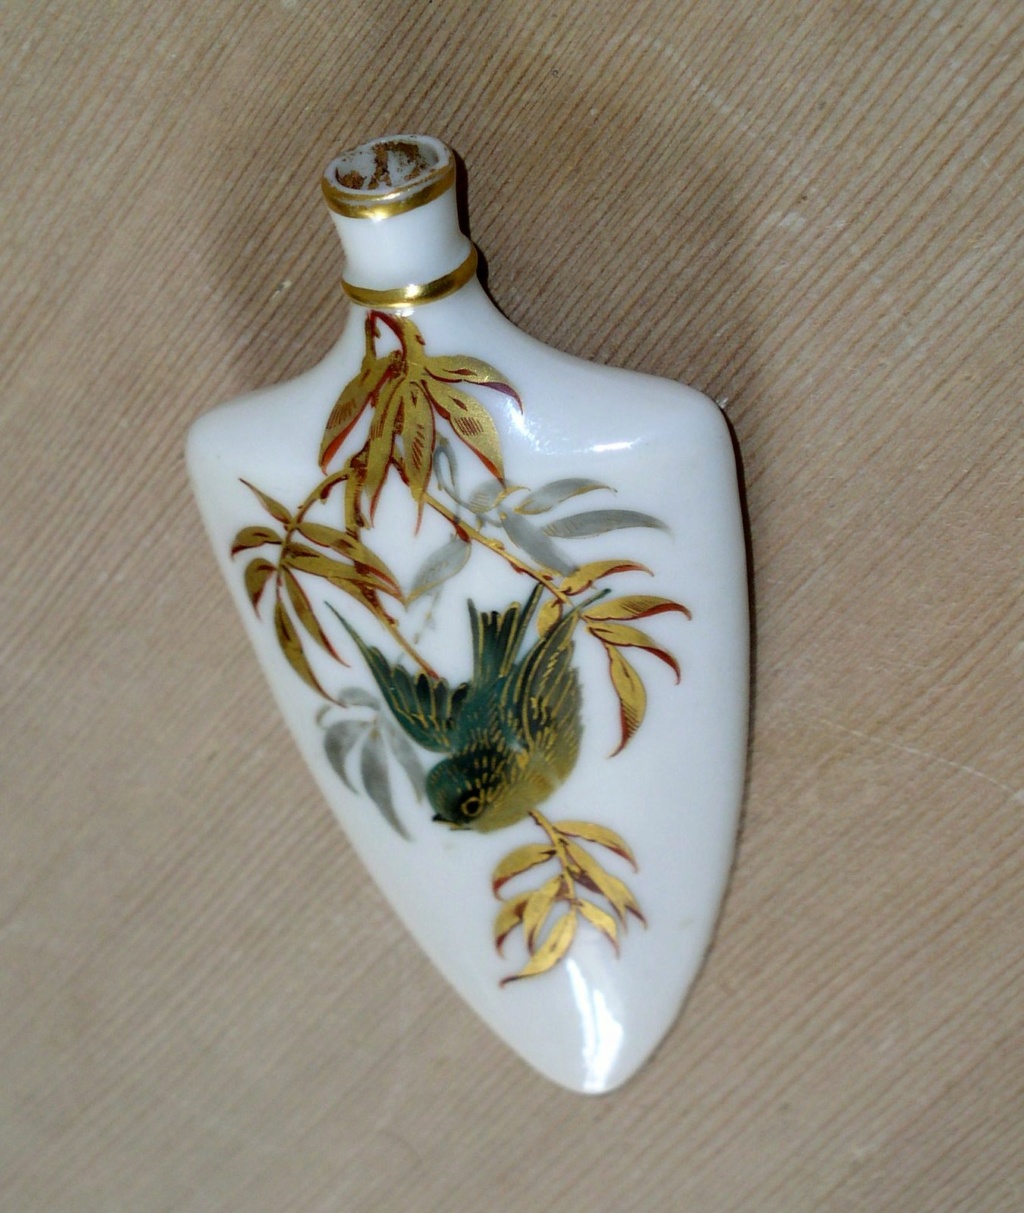 Worcester Porcelain Perfume bottle with bird decoration. P1010168